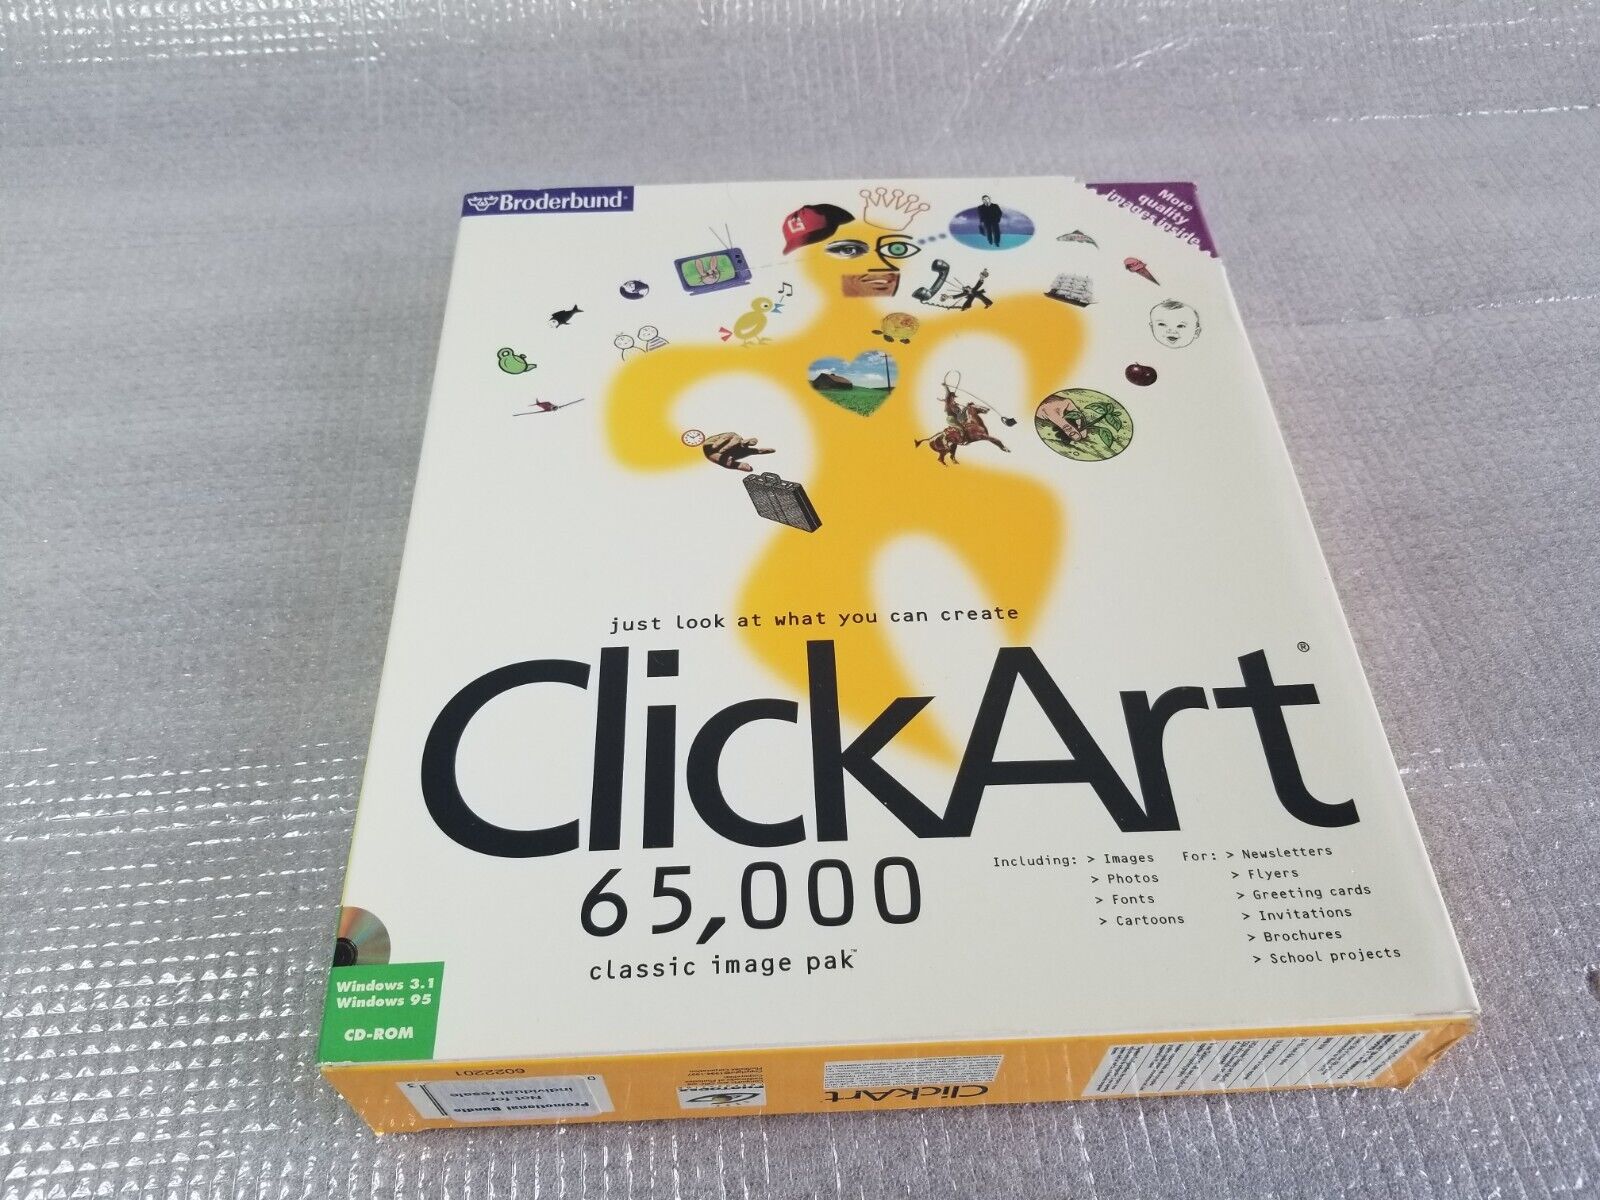 Click Art 65,000 Starter Image Pak Software  Windows 3.1 95 + Stationery Shop